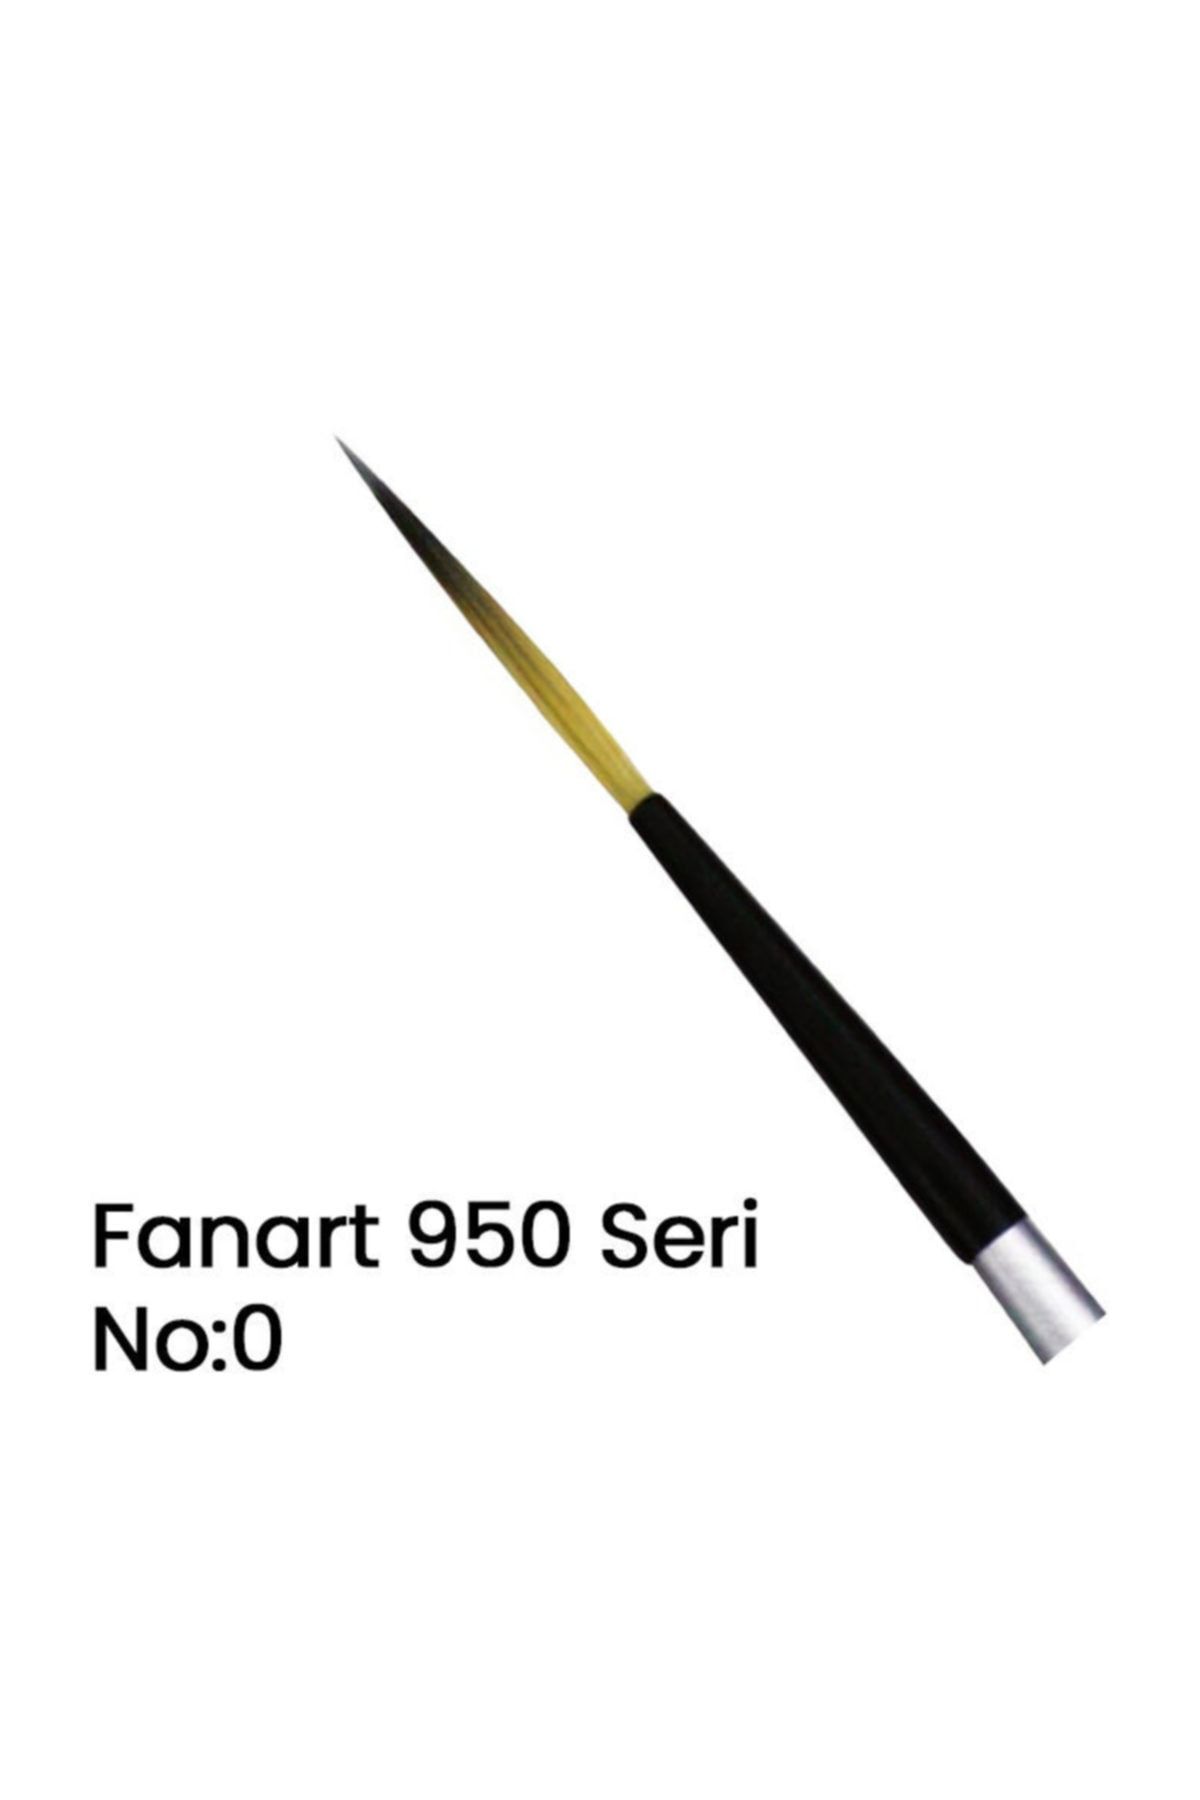 Fanart 950 Seri Çizgi Fırça No 0